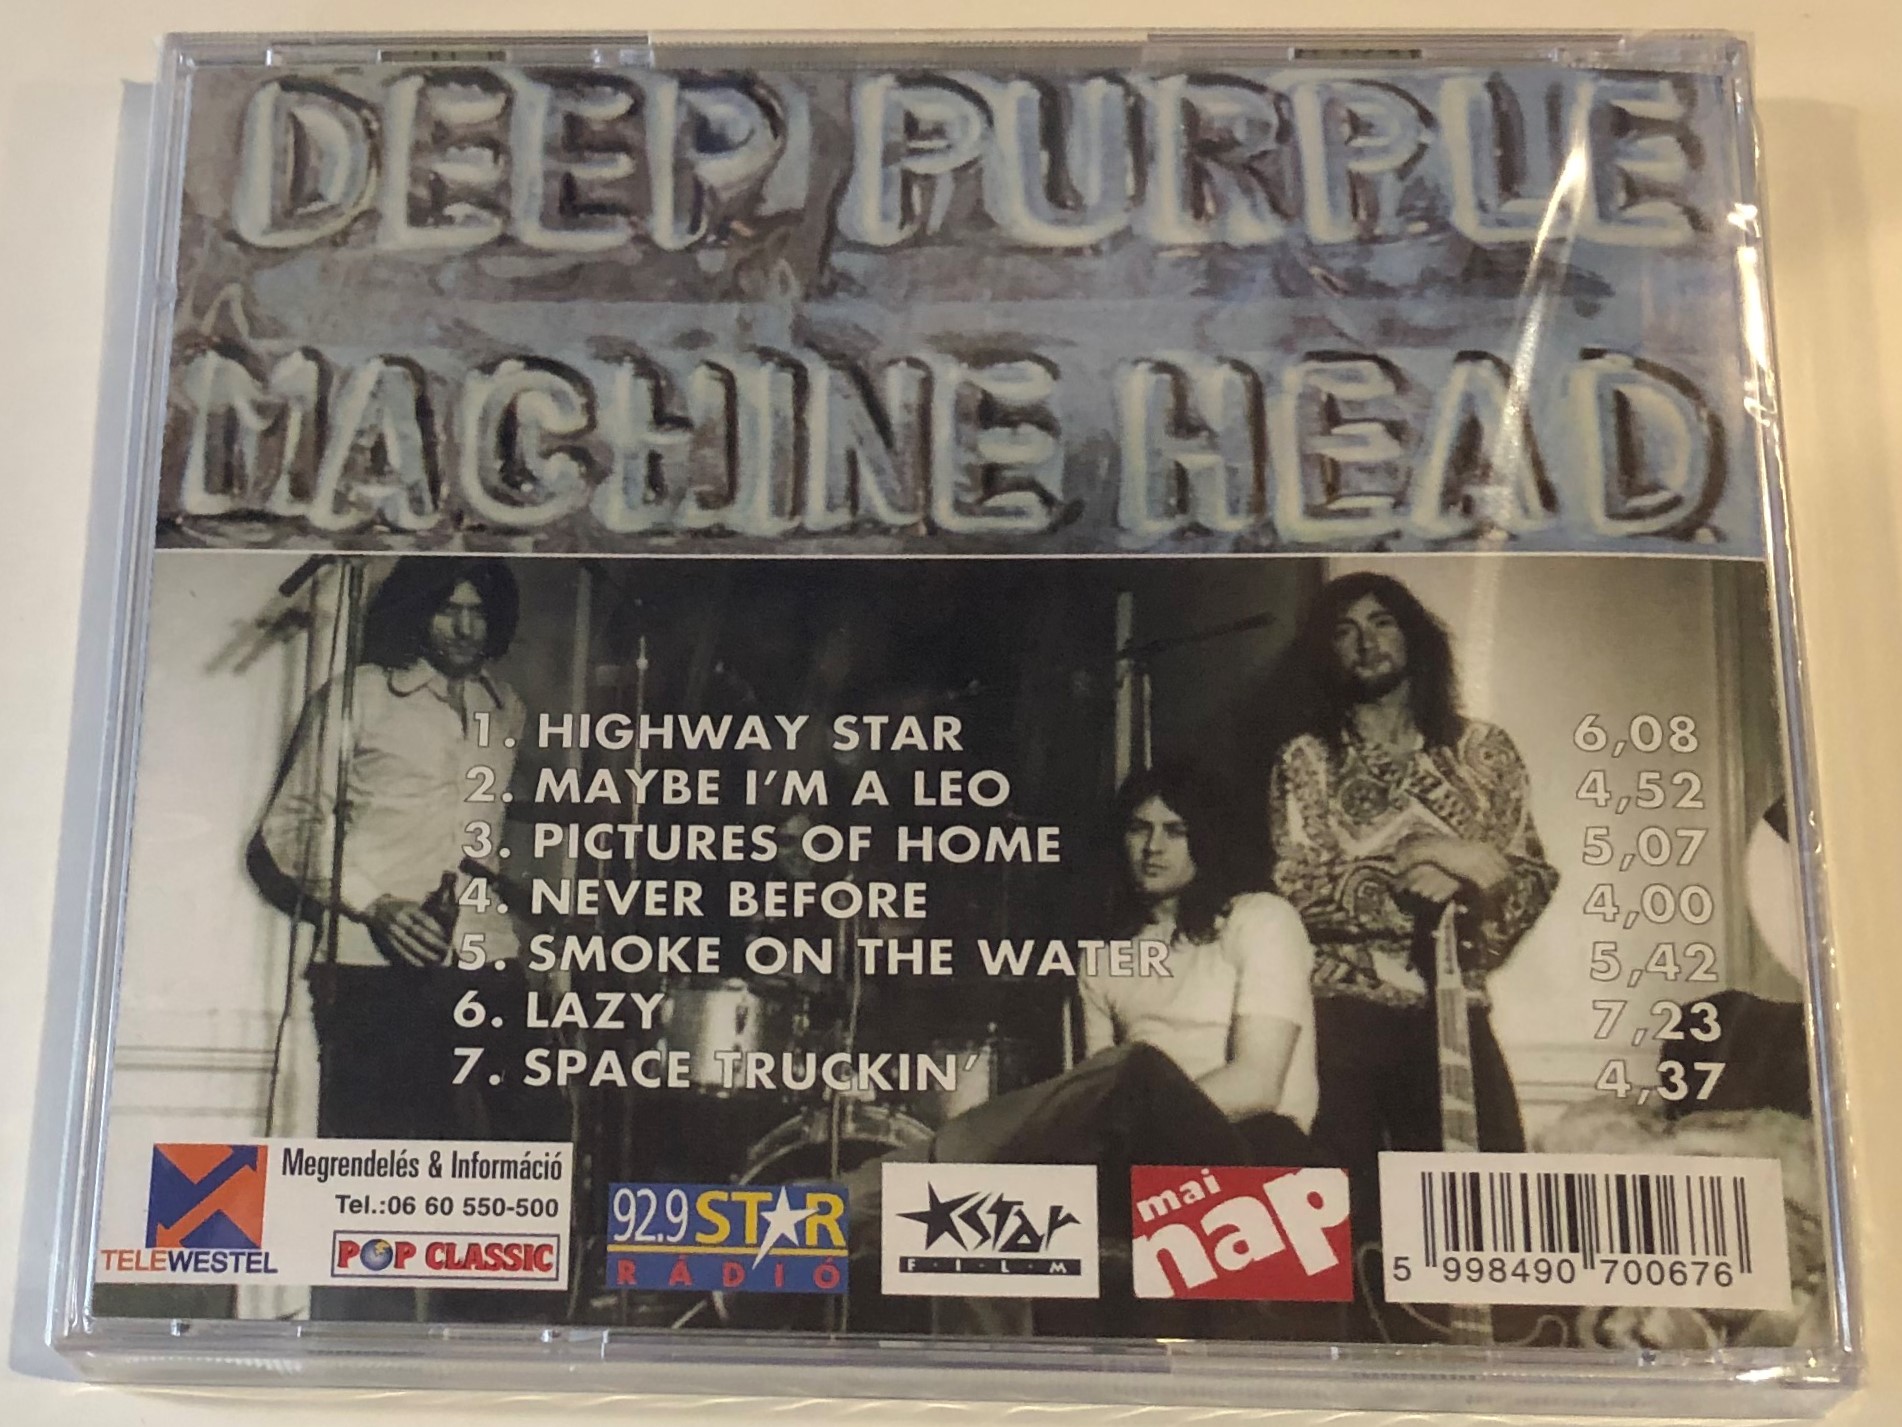 deep-purple-machine-head-pop-classic-audio-cd-5998490700676-2-.jpg